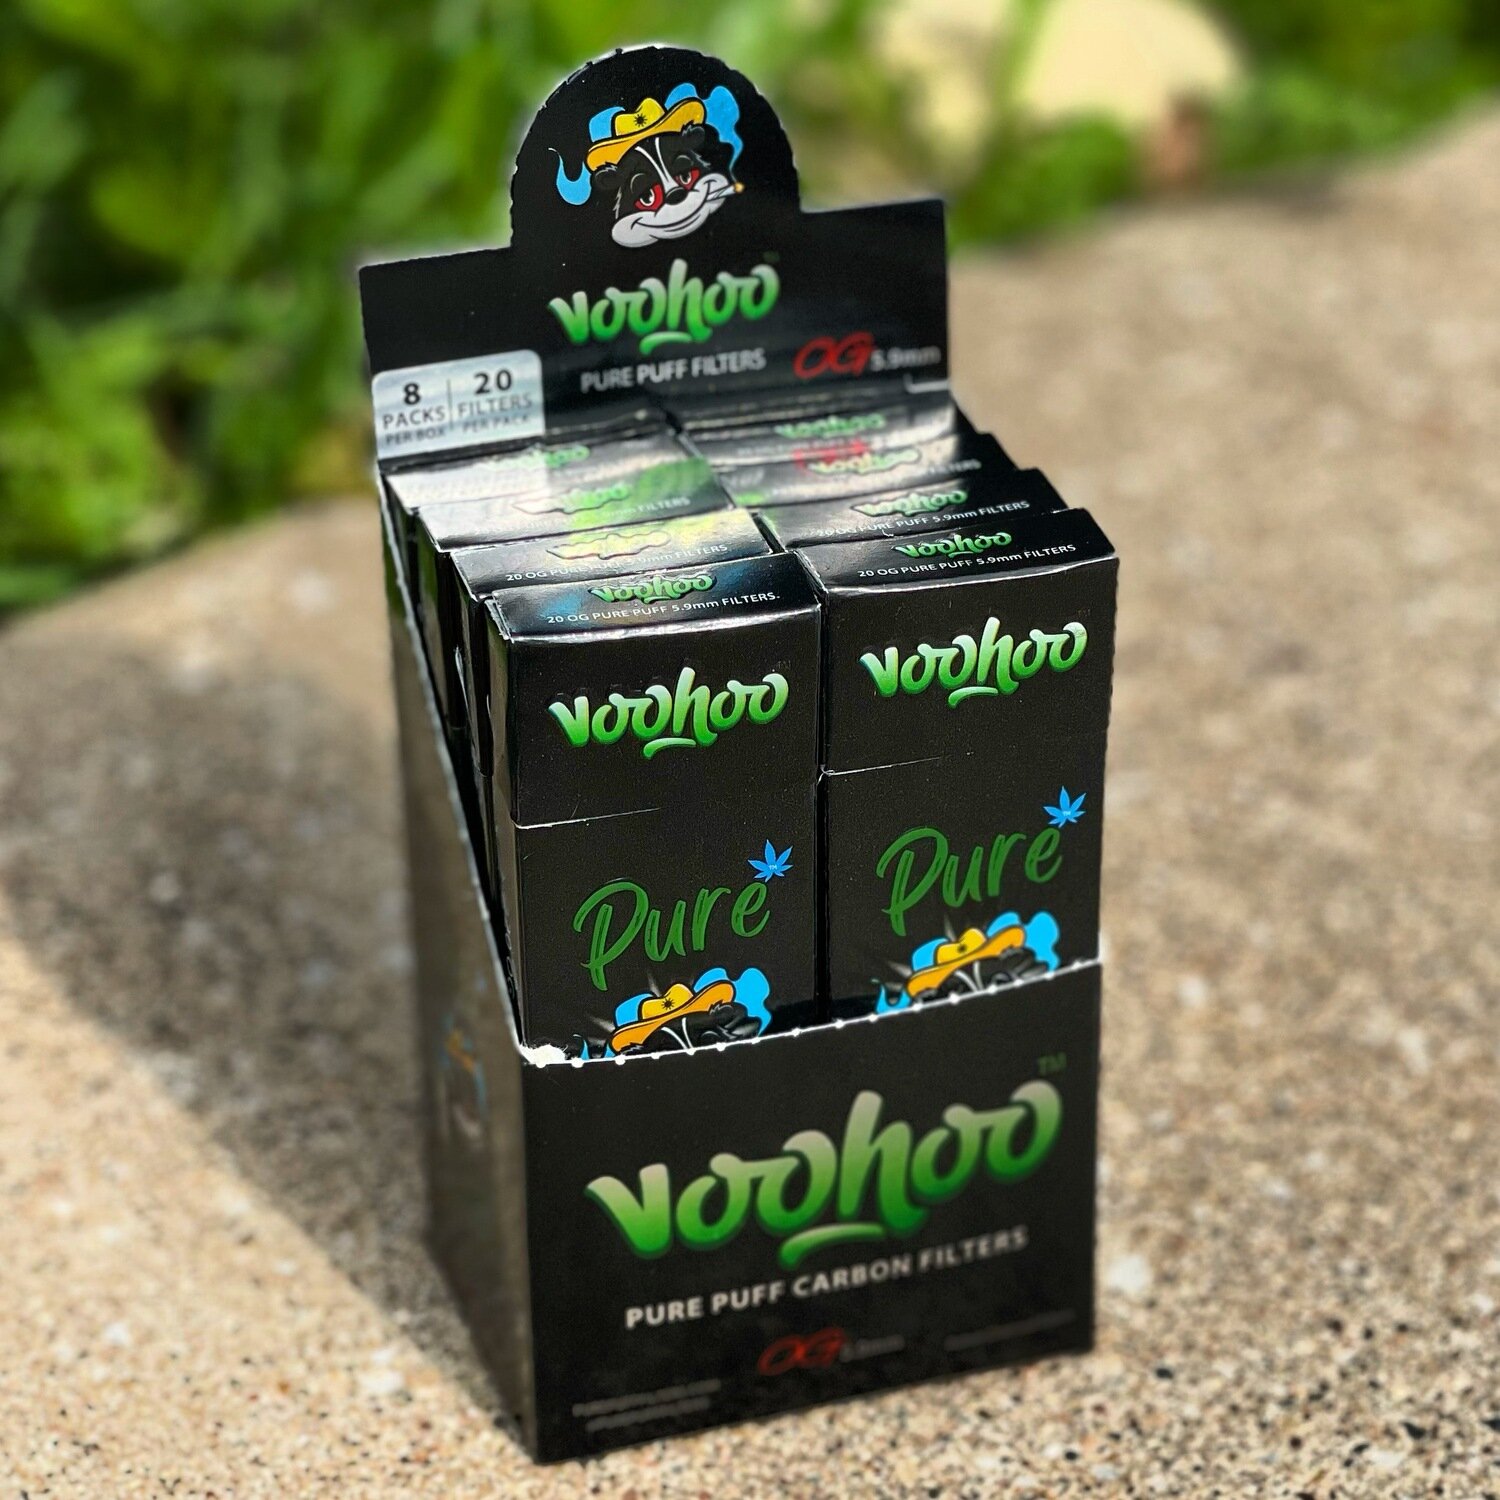 Box of Voohoo OG 5.9mm Filters (160 Filters Per Box - 8 Packs, 20 Filters Per Pack)